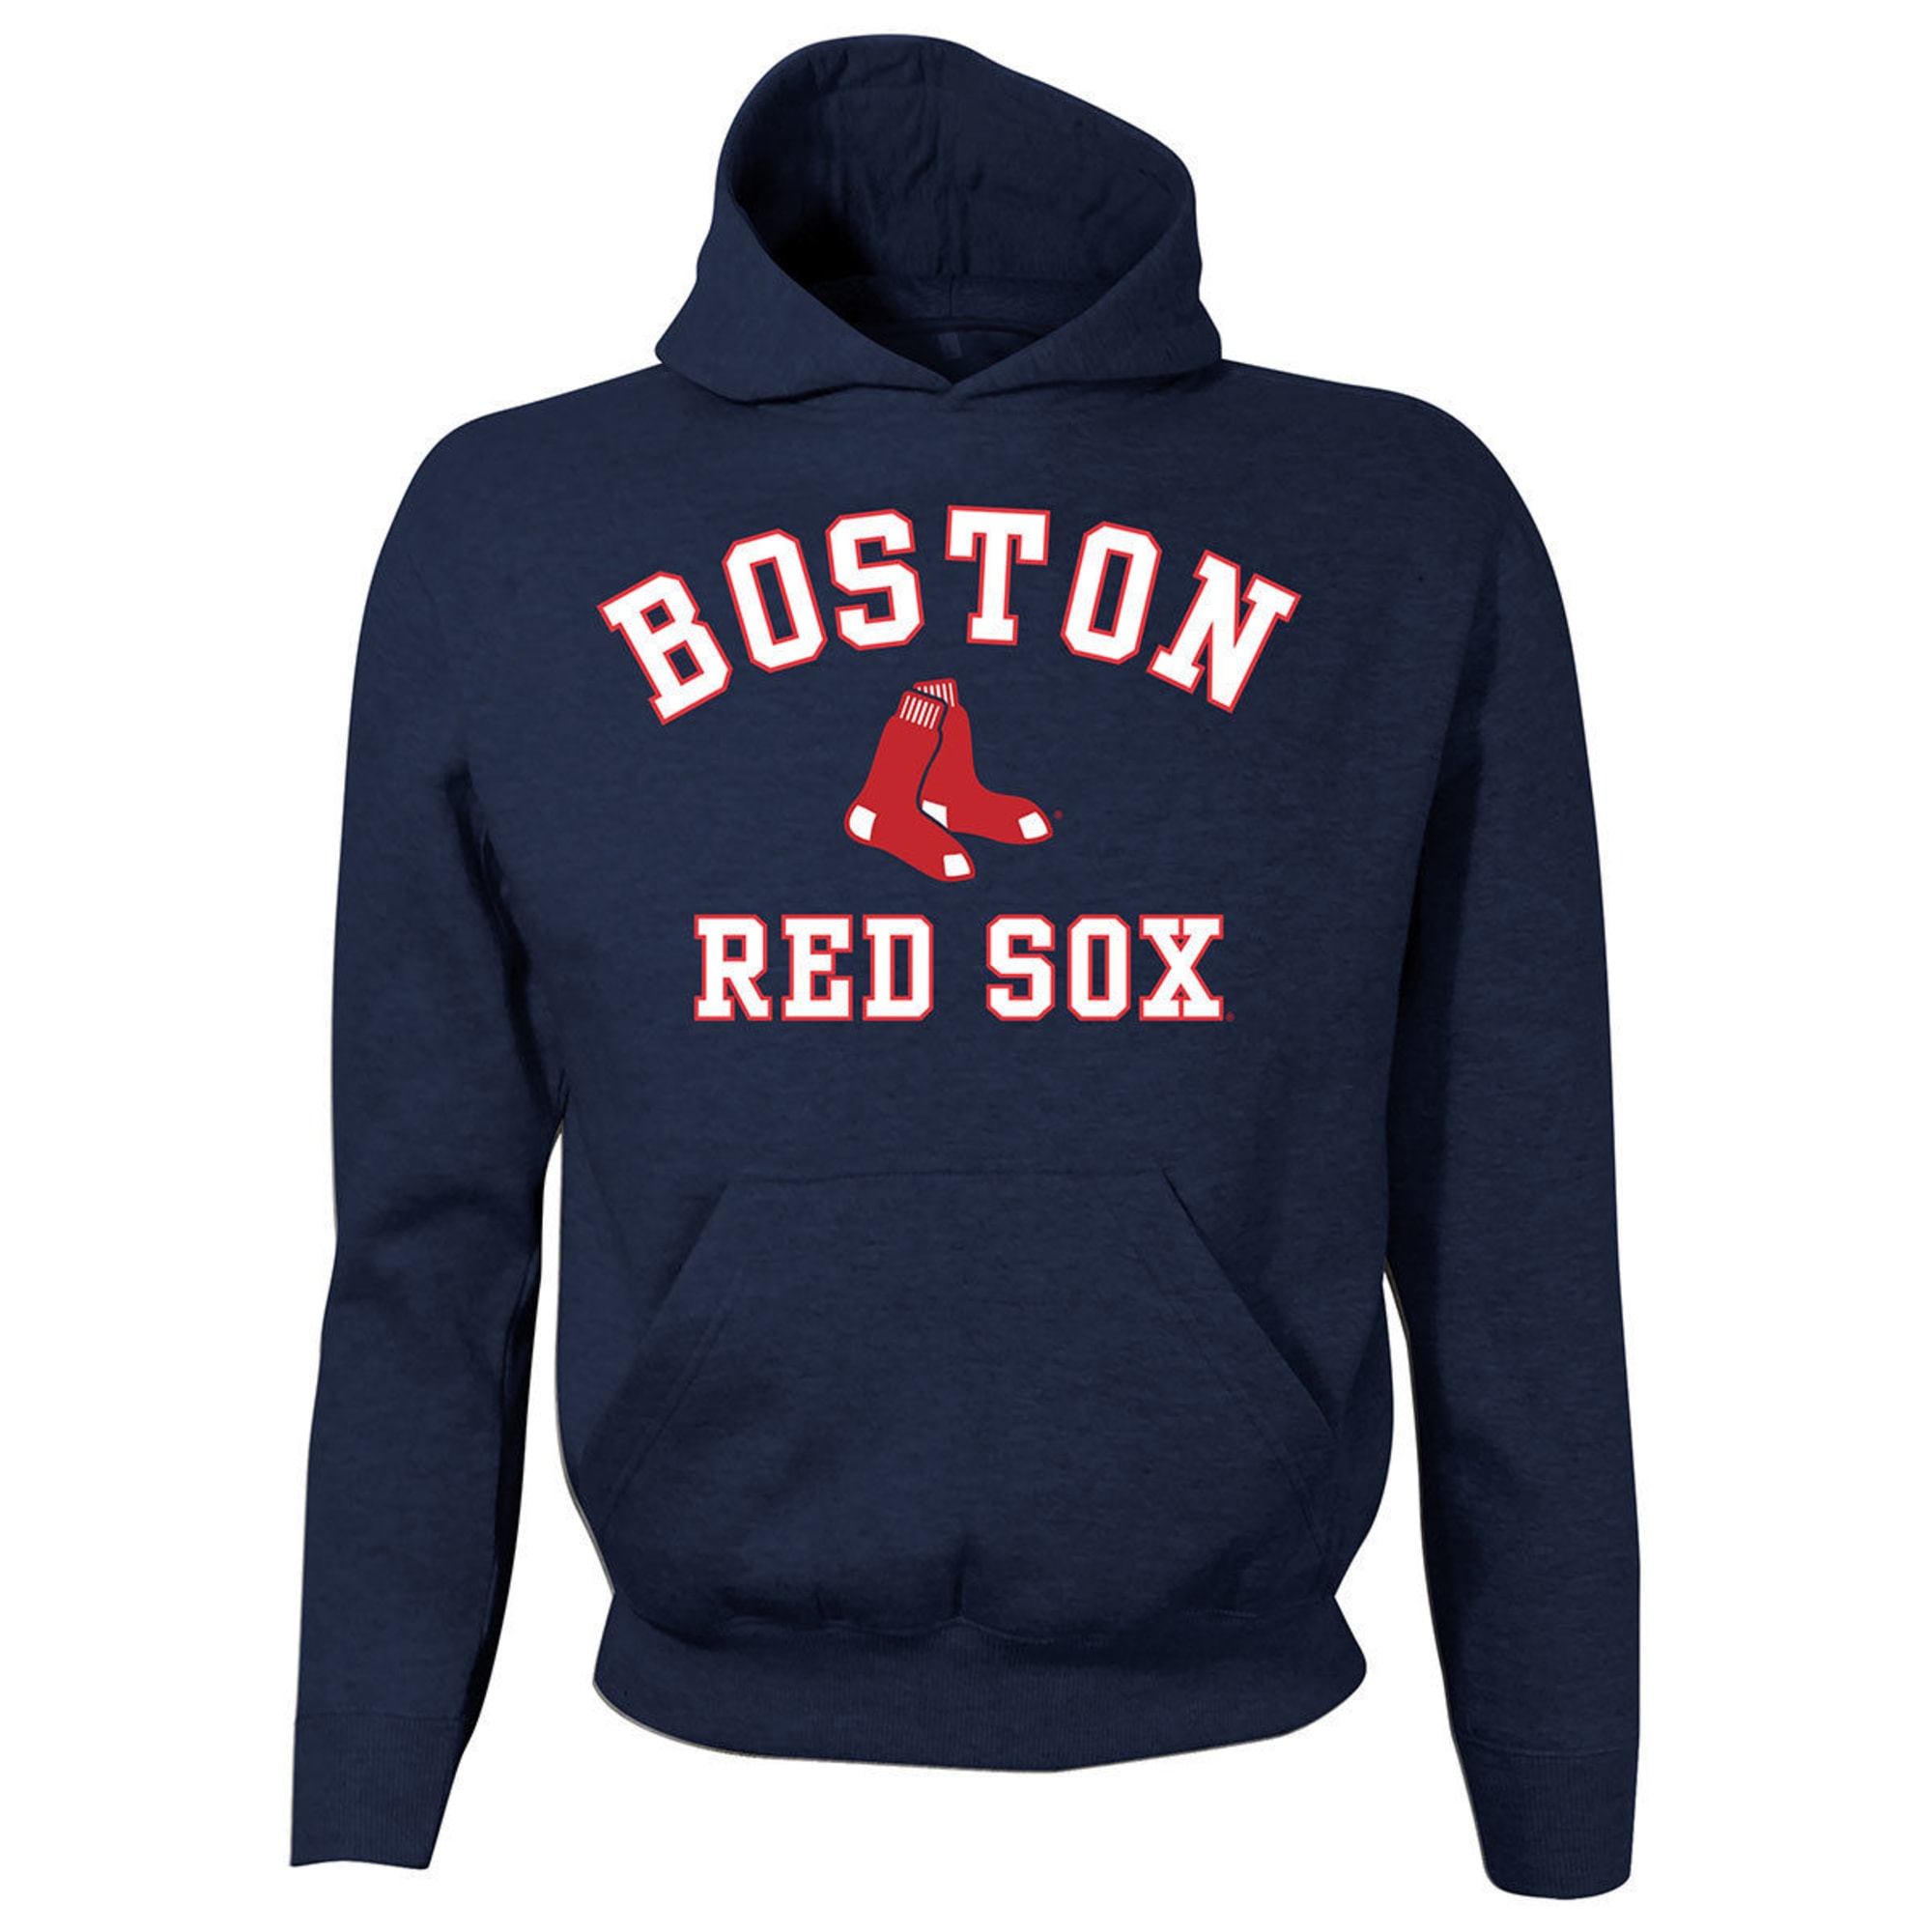 Boston Red Sox Sweater Large Youth Boys Hooded Sweatshirt Hoodie